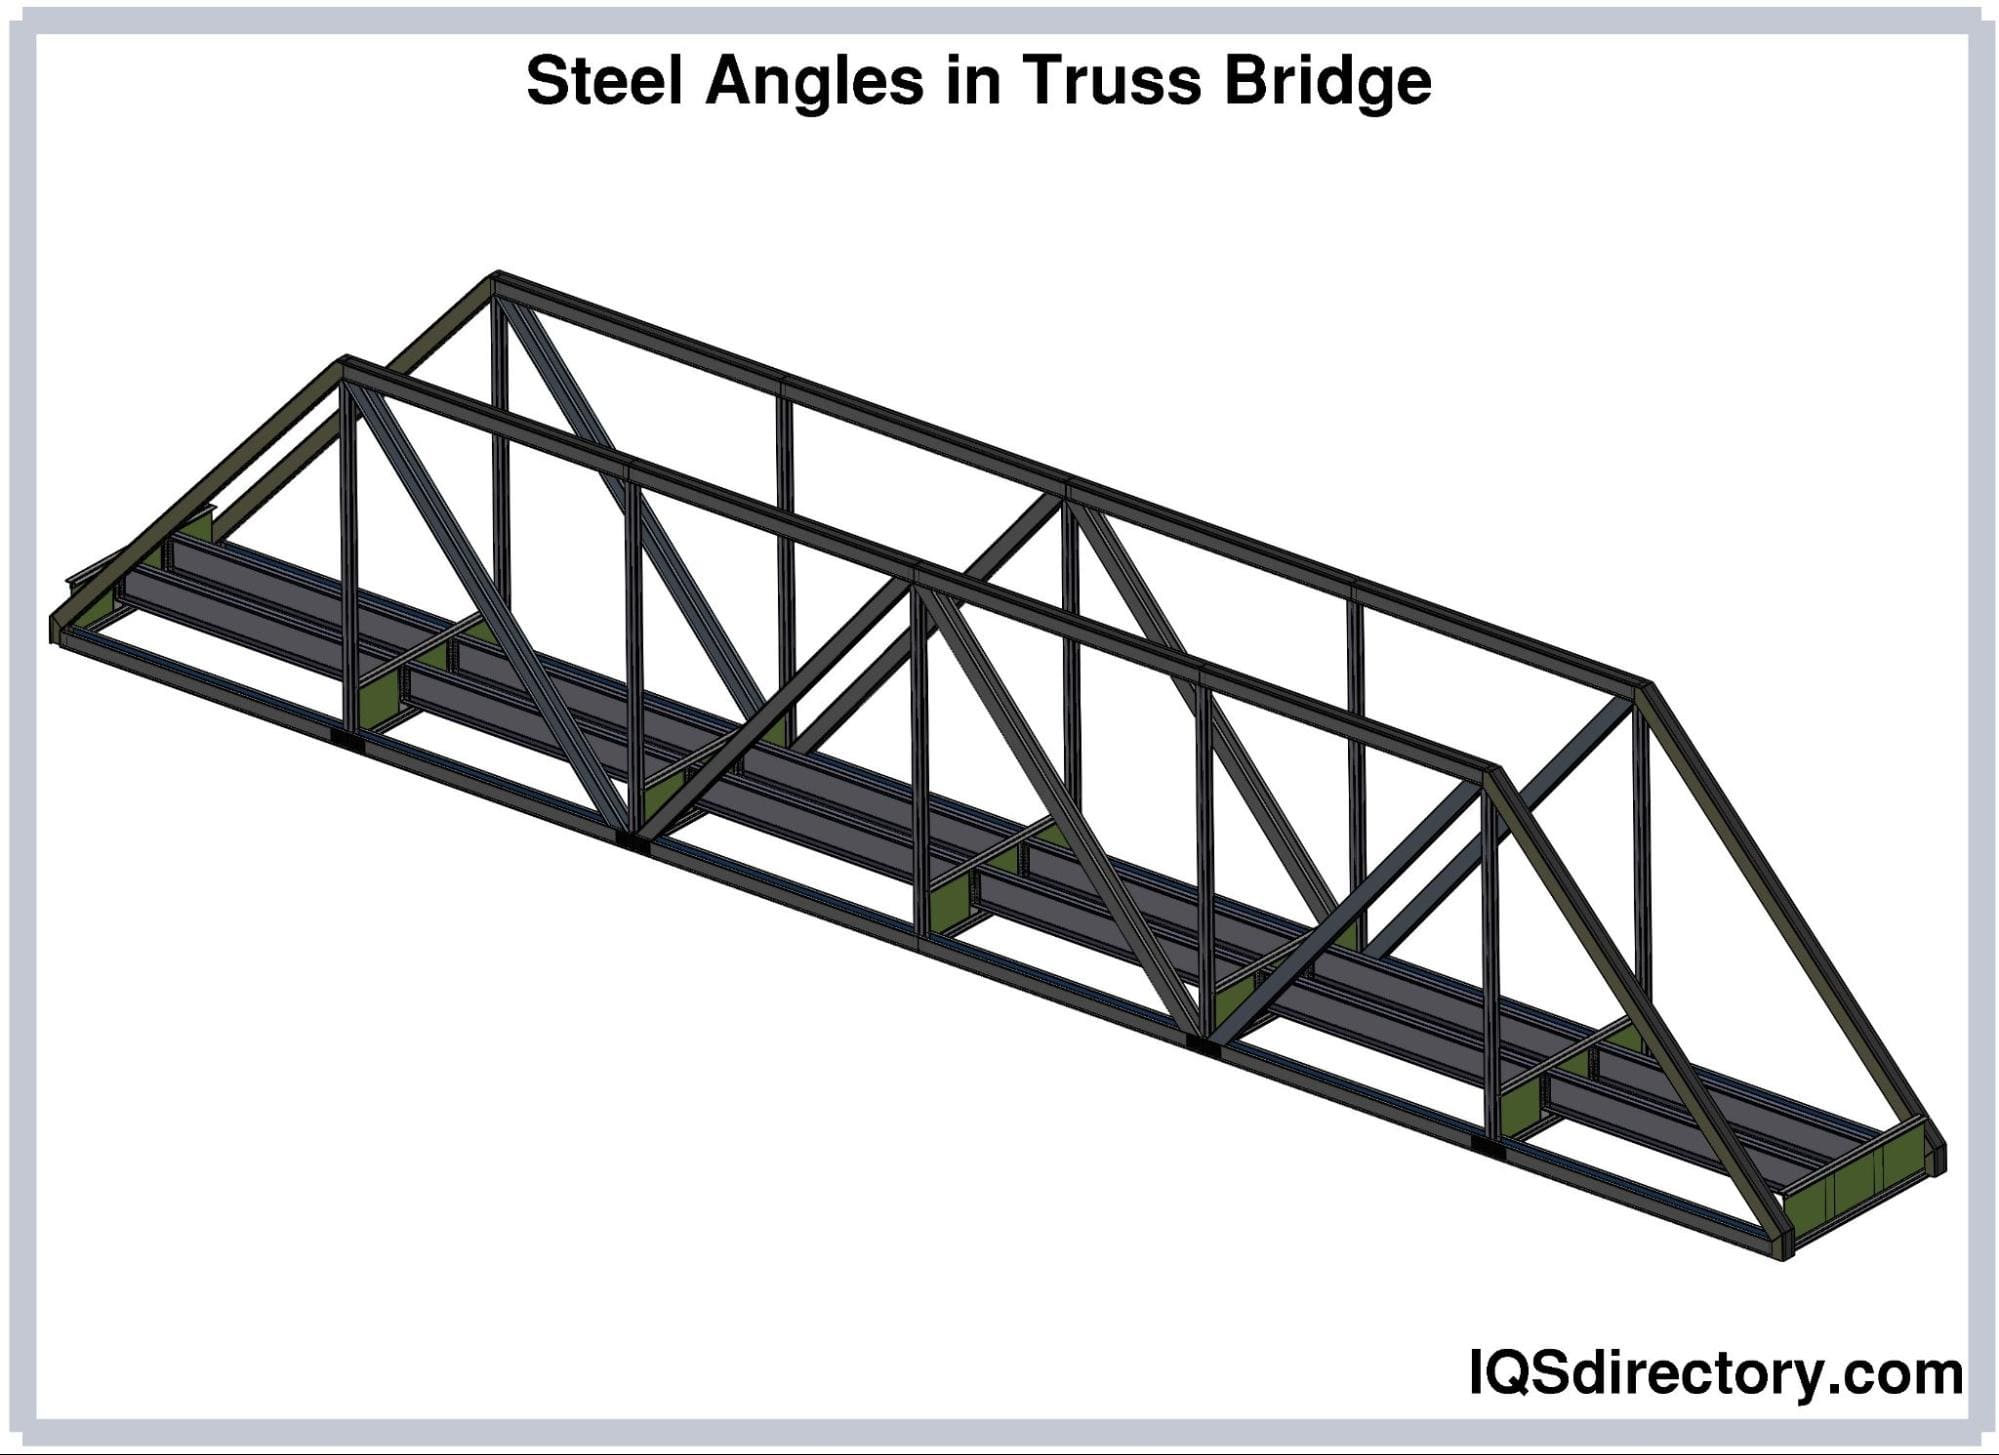 Steel Angles in Truss Bridge